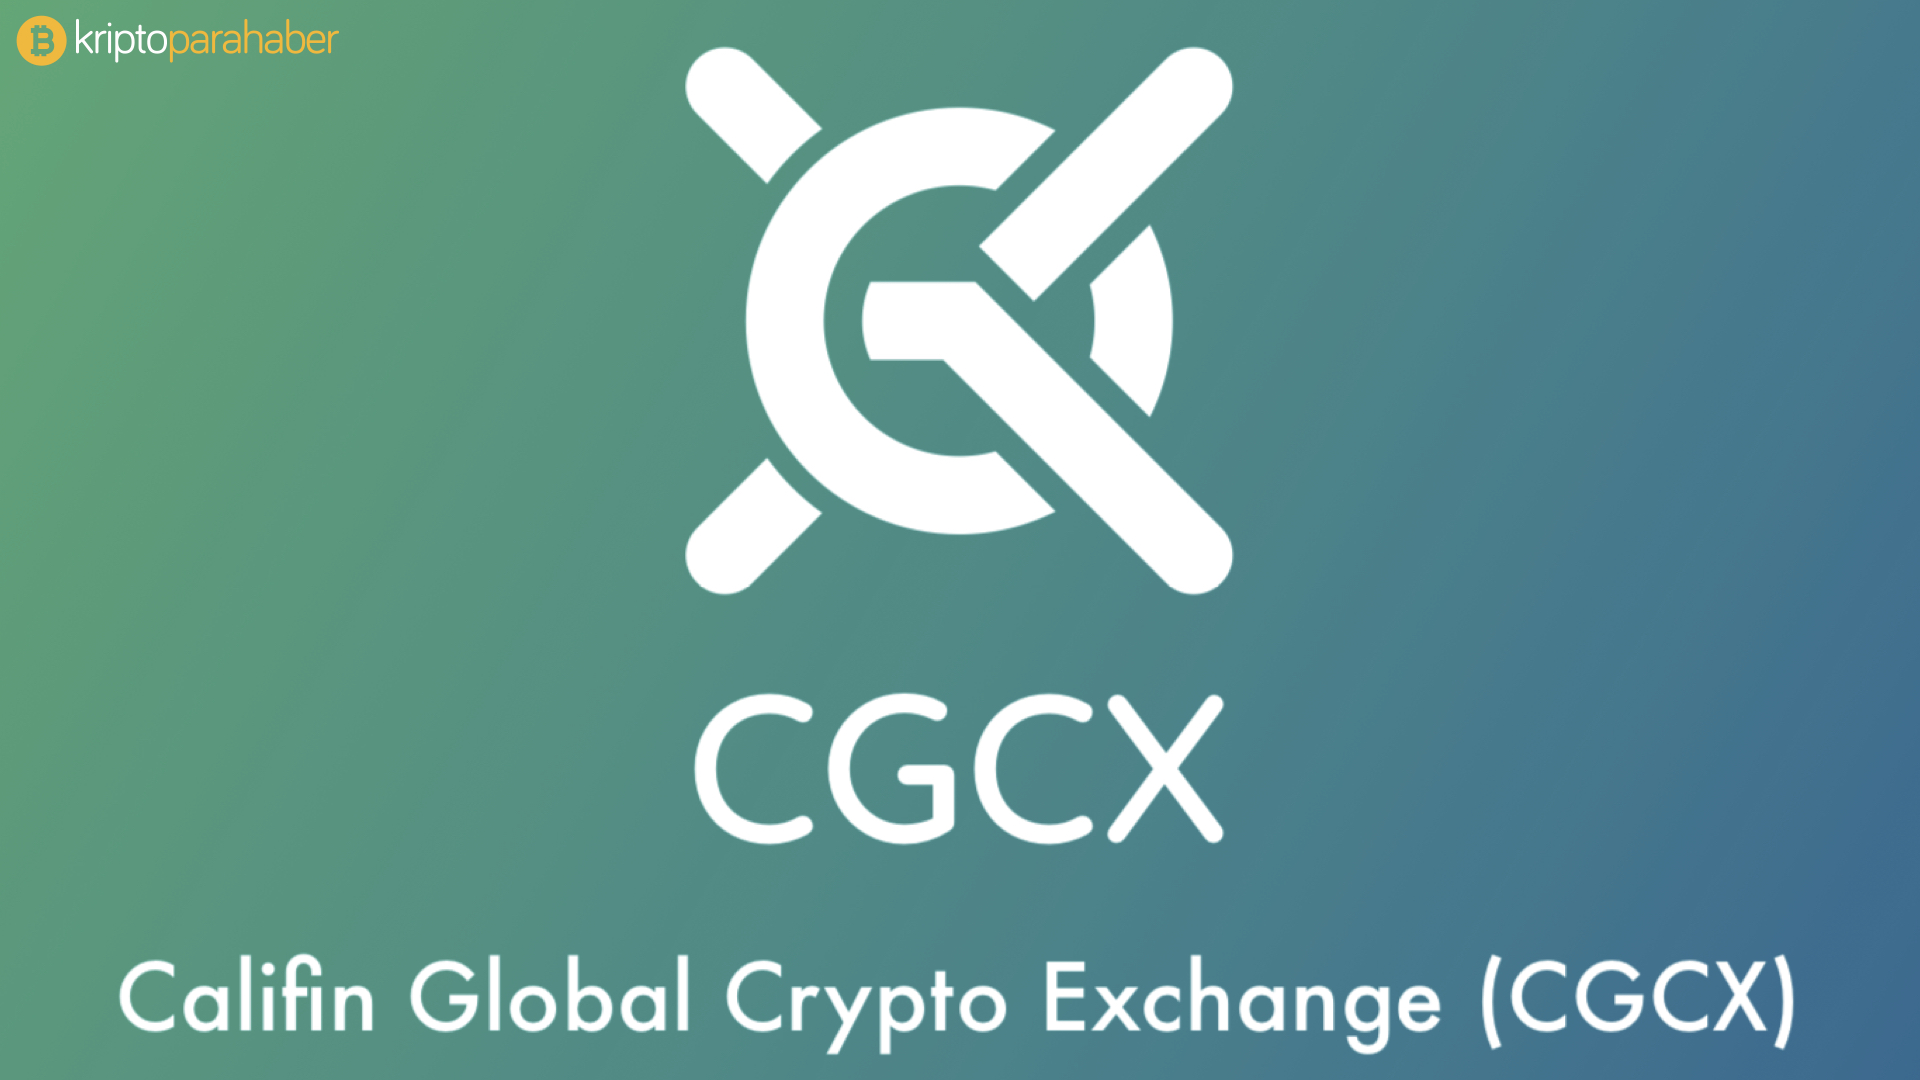 Yüksek teknoloji ürünü kripto para borsa platformu CGCX ...